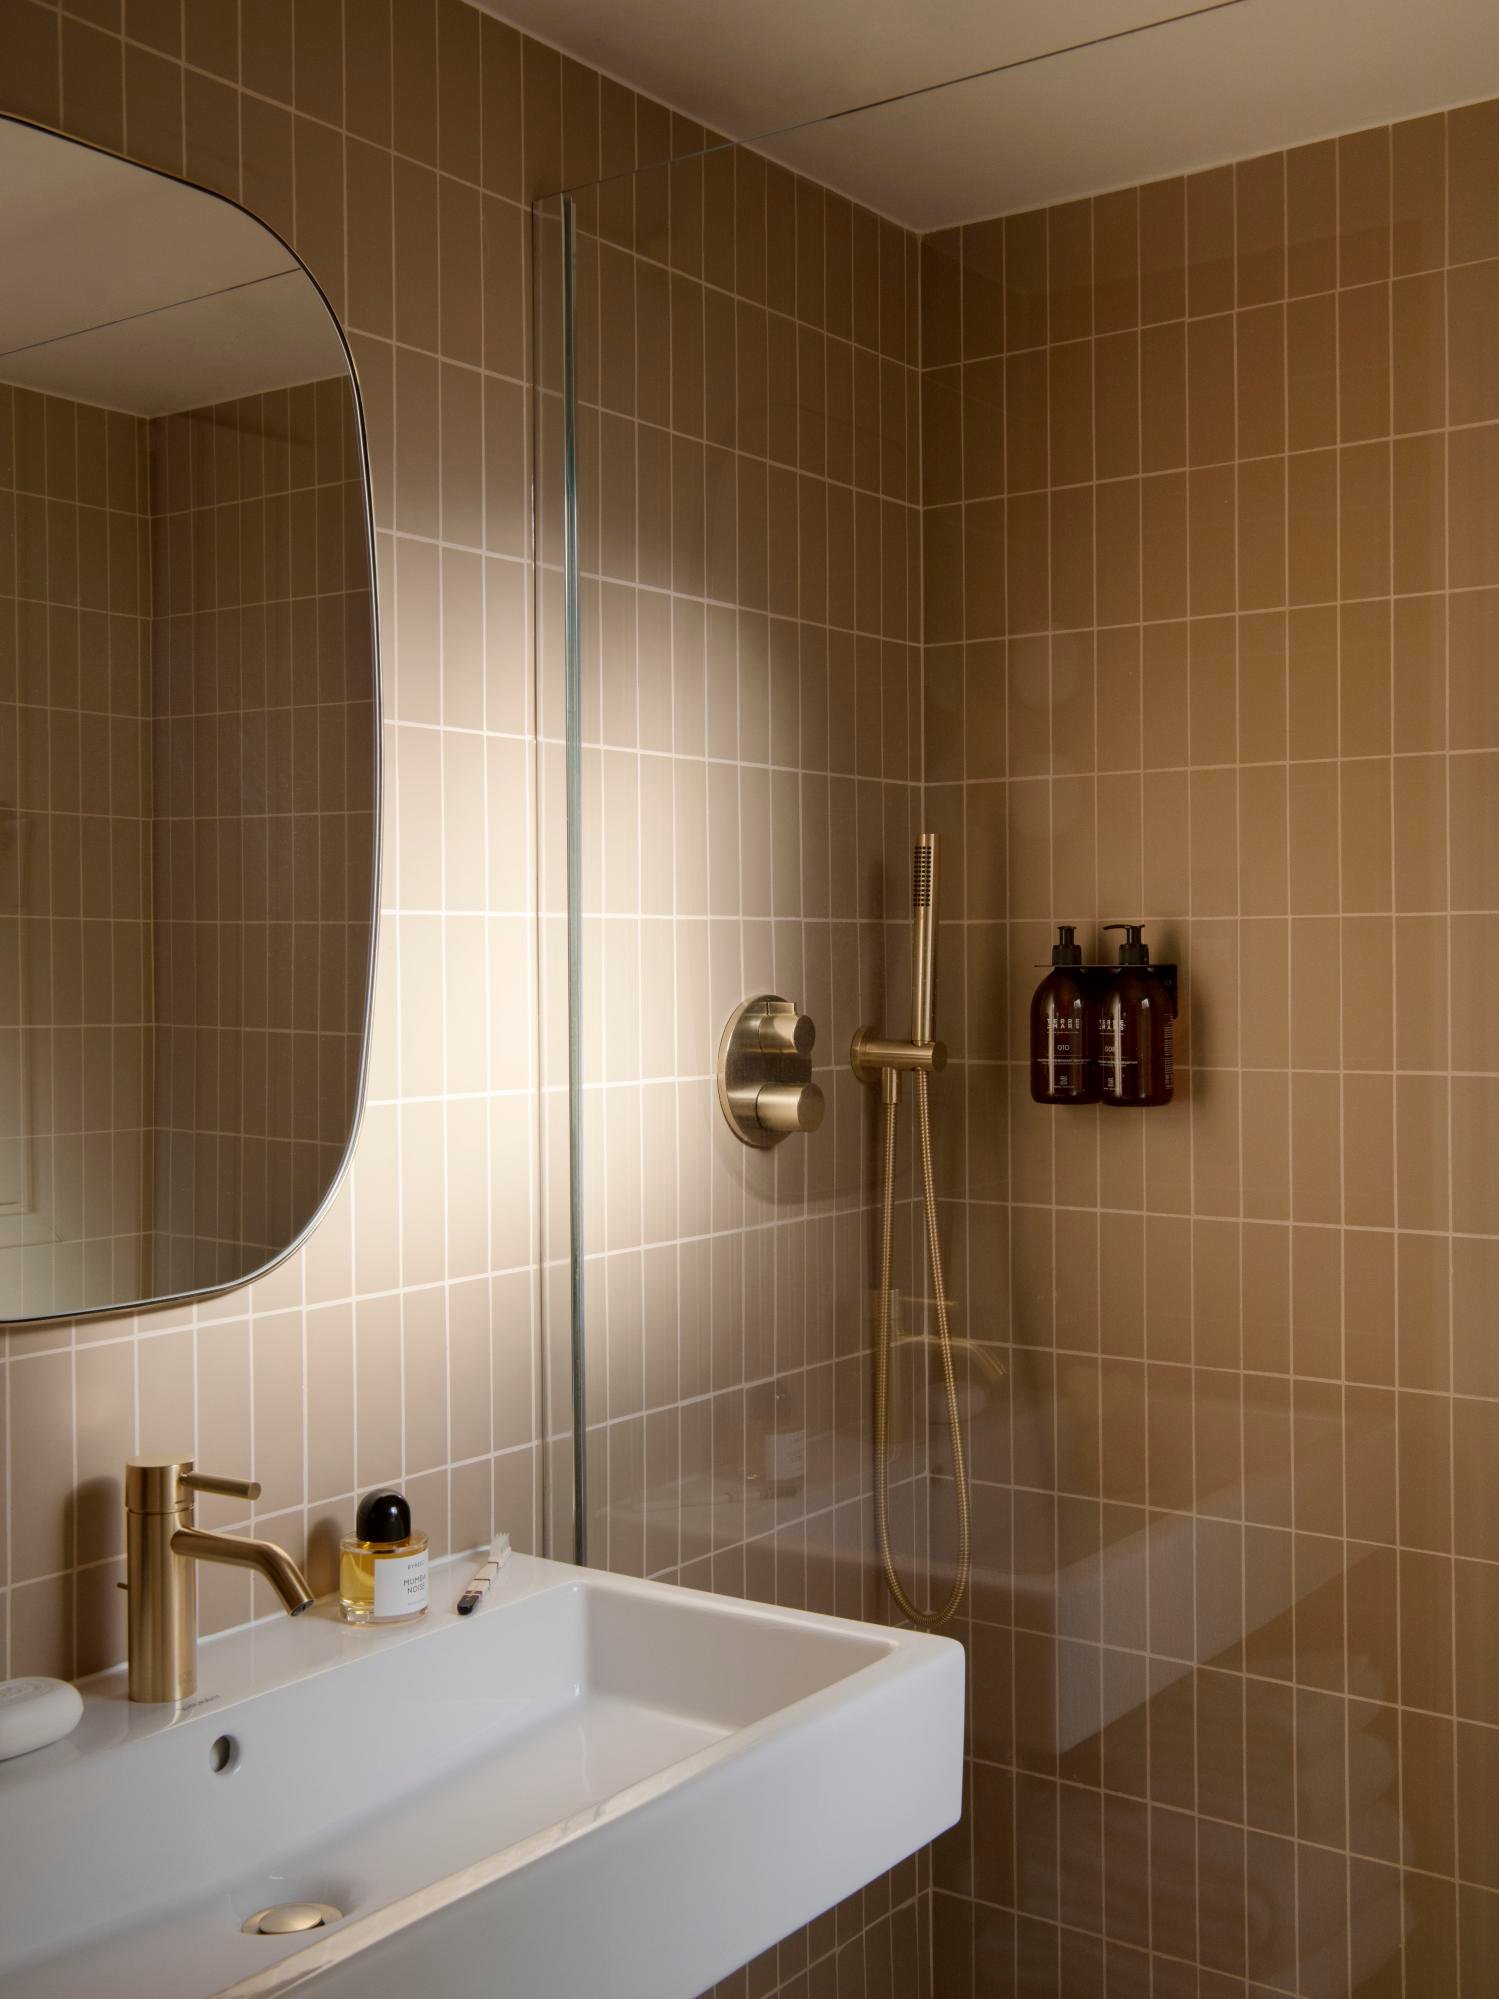 Nuage Paris 8 | Superior bathroom and shower room